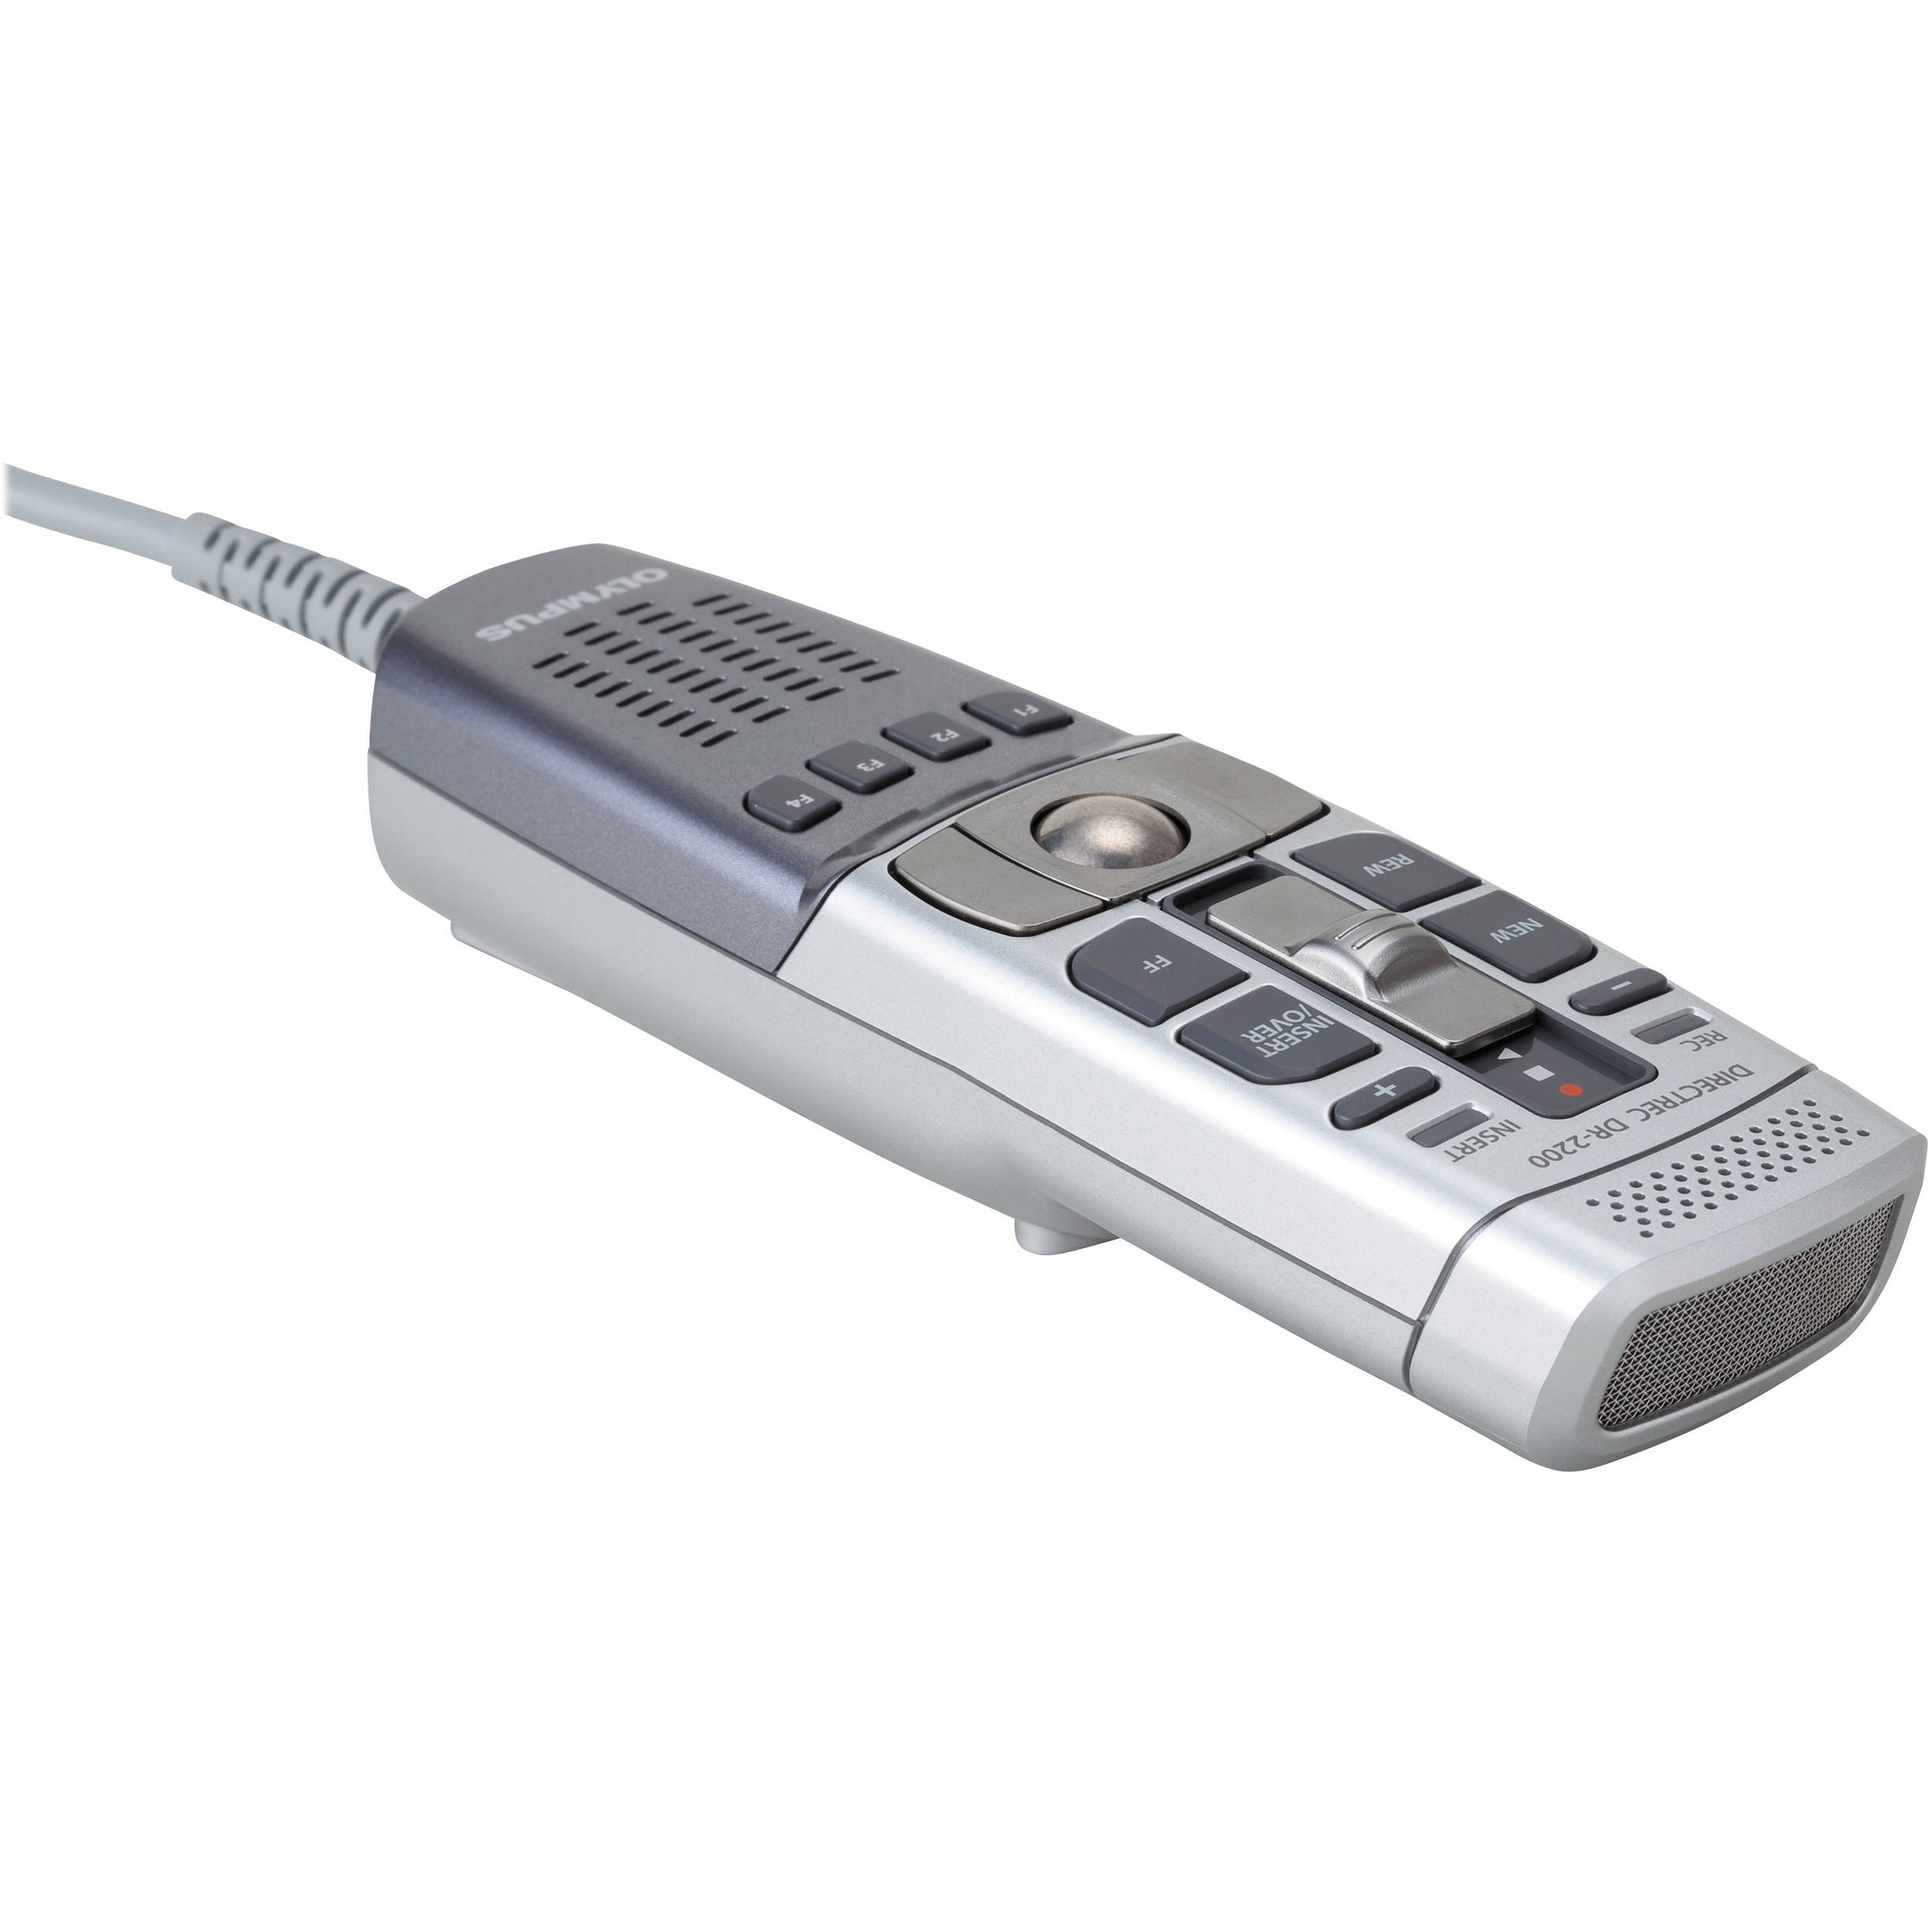 Usb user. Микрофон с флешкой. Alctron k5 микрофон USB комплектация. X10dr Microphone. Professional Digital Voice Recorder купить разъём USB.